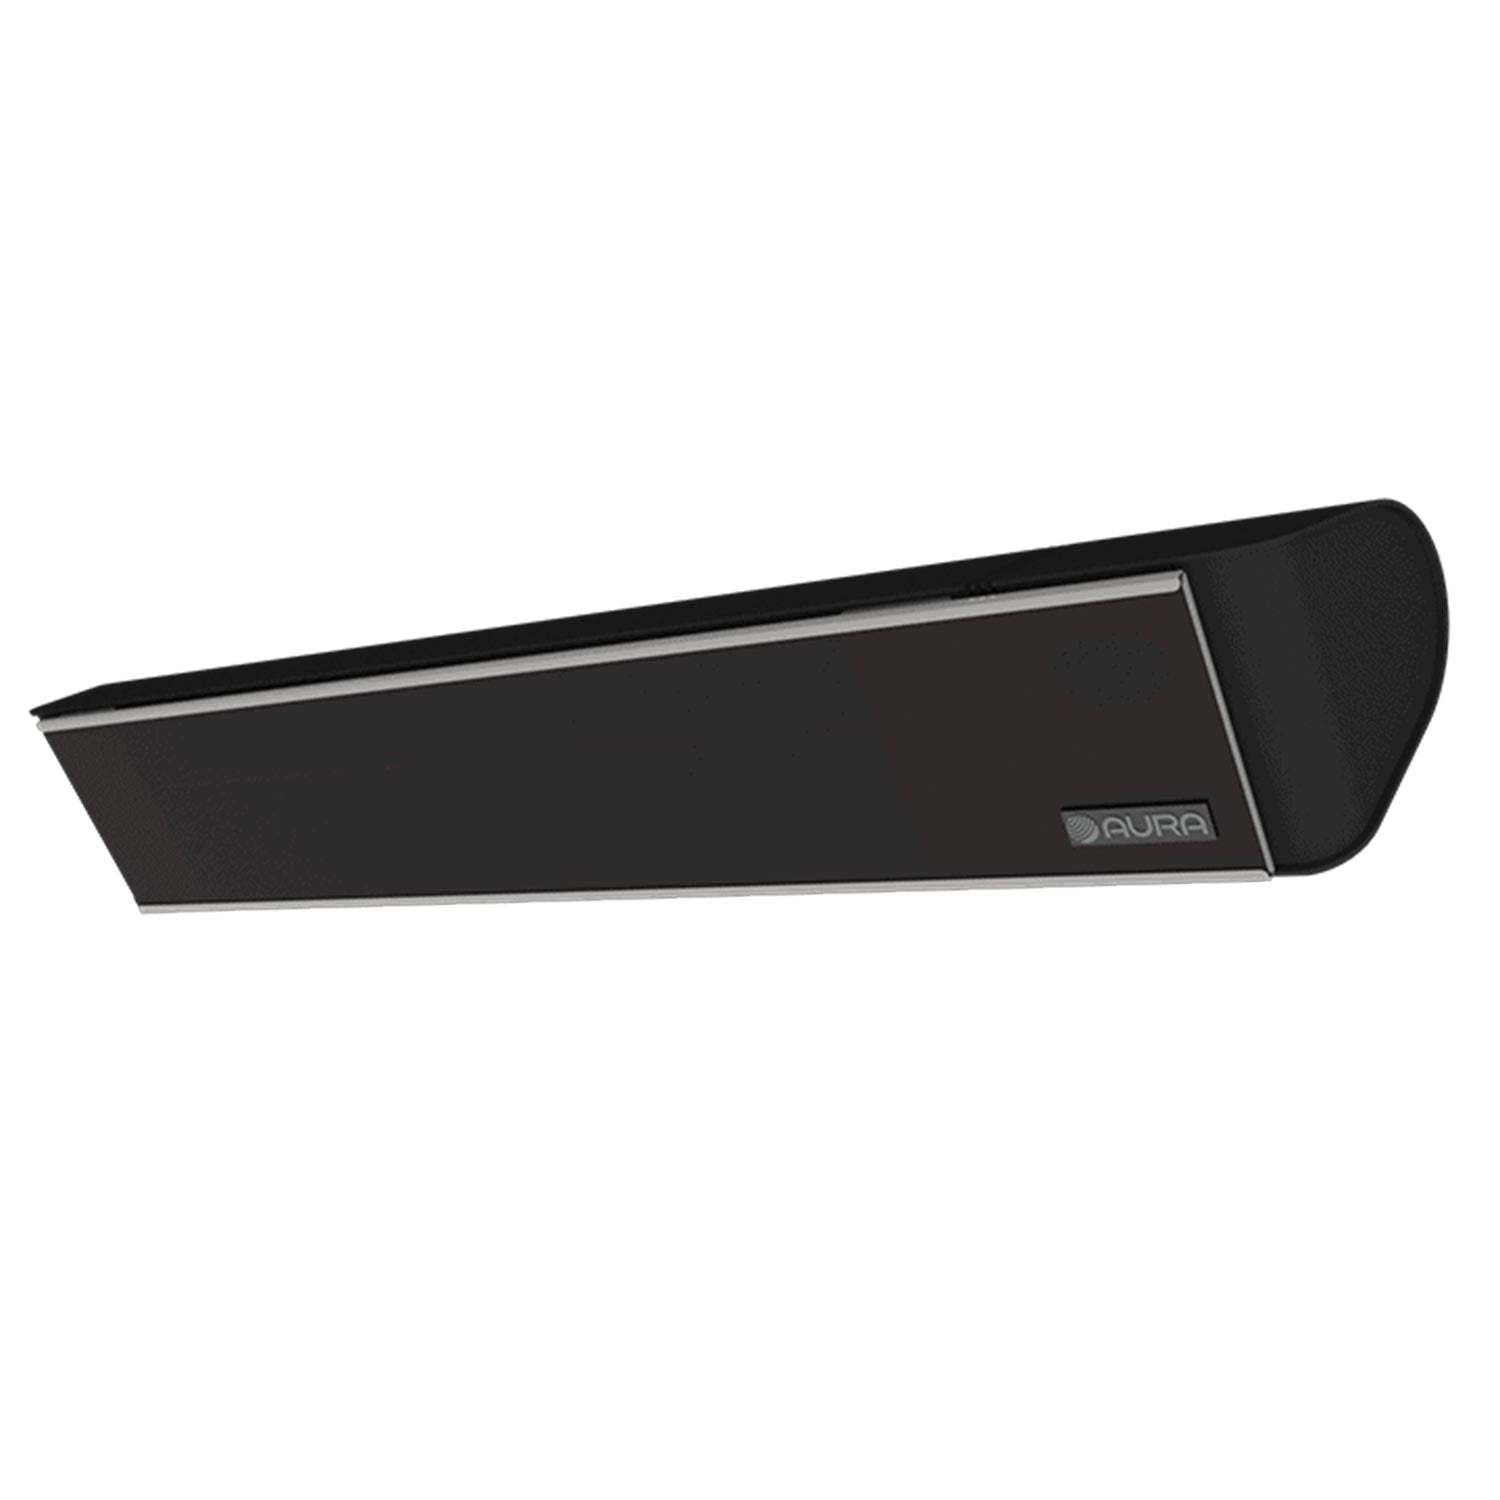 Aura ADGLASS1500 Decor Series Infrared Heater w/ Bluetooth & Remote (Black)